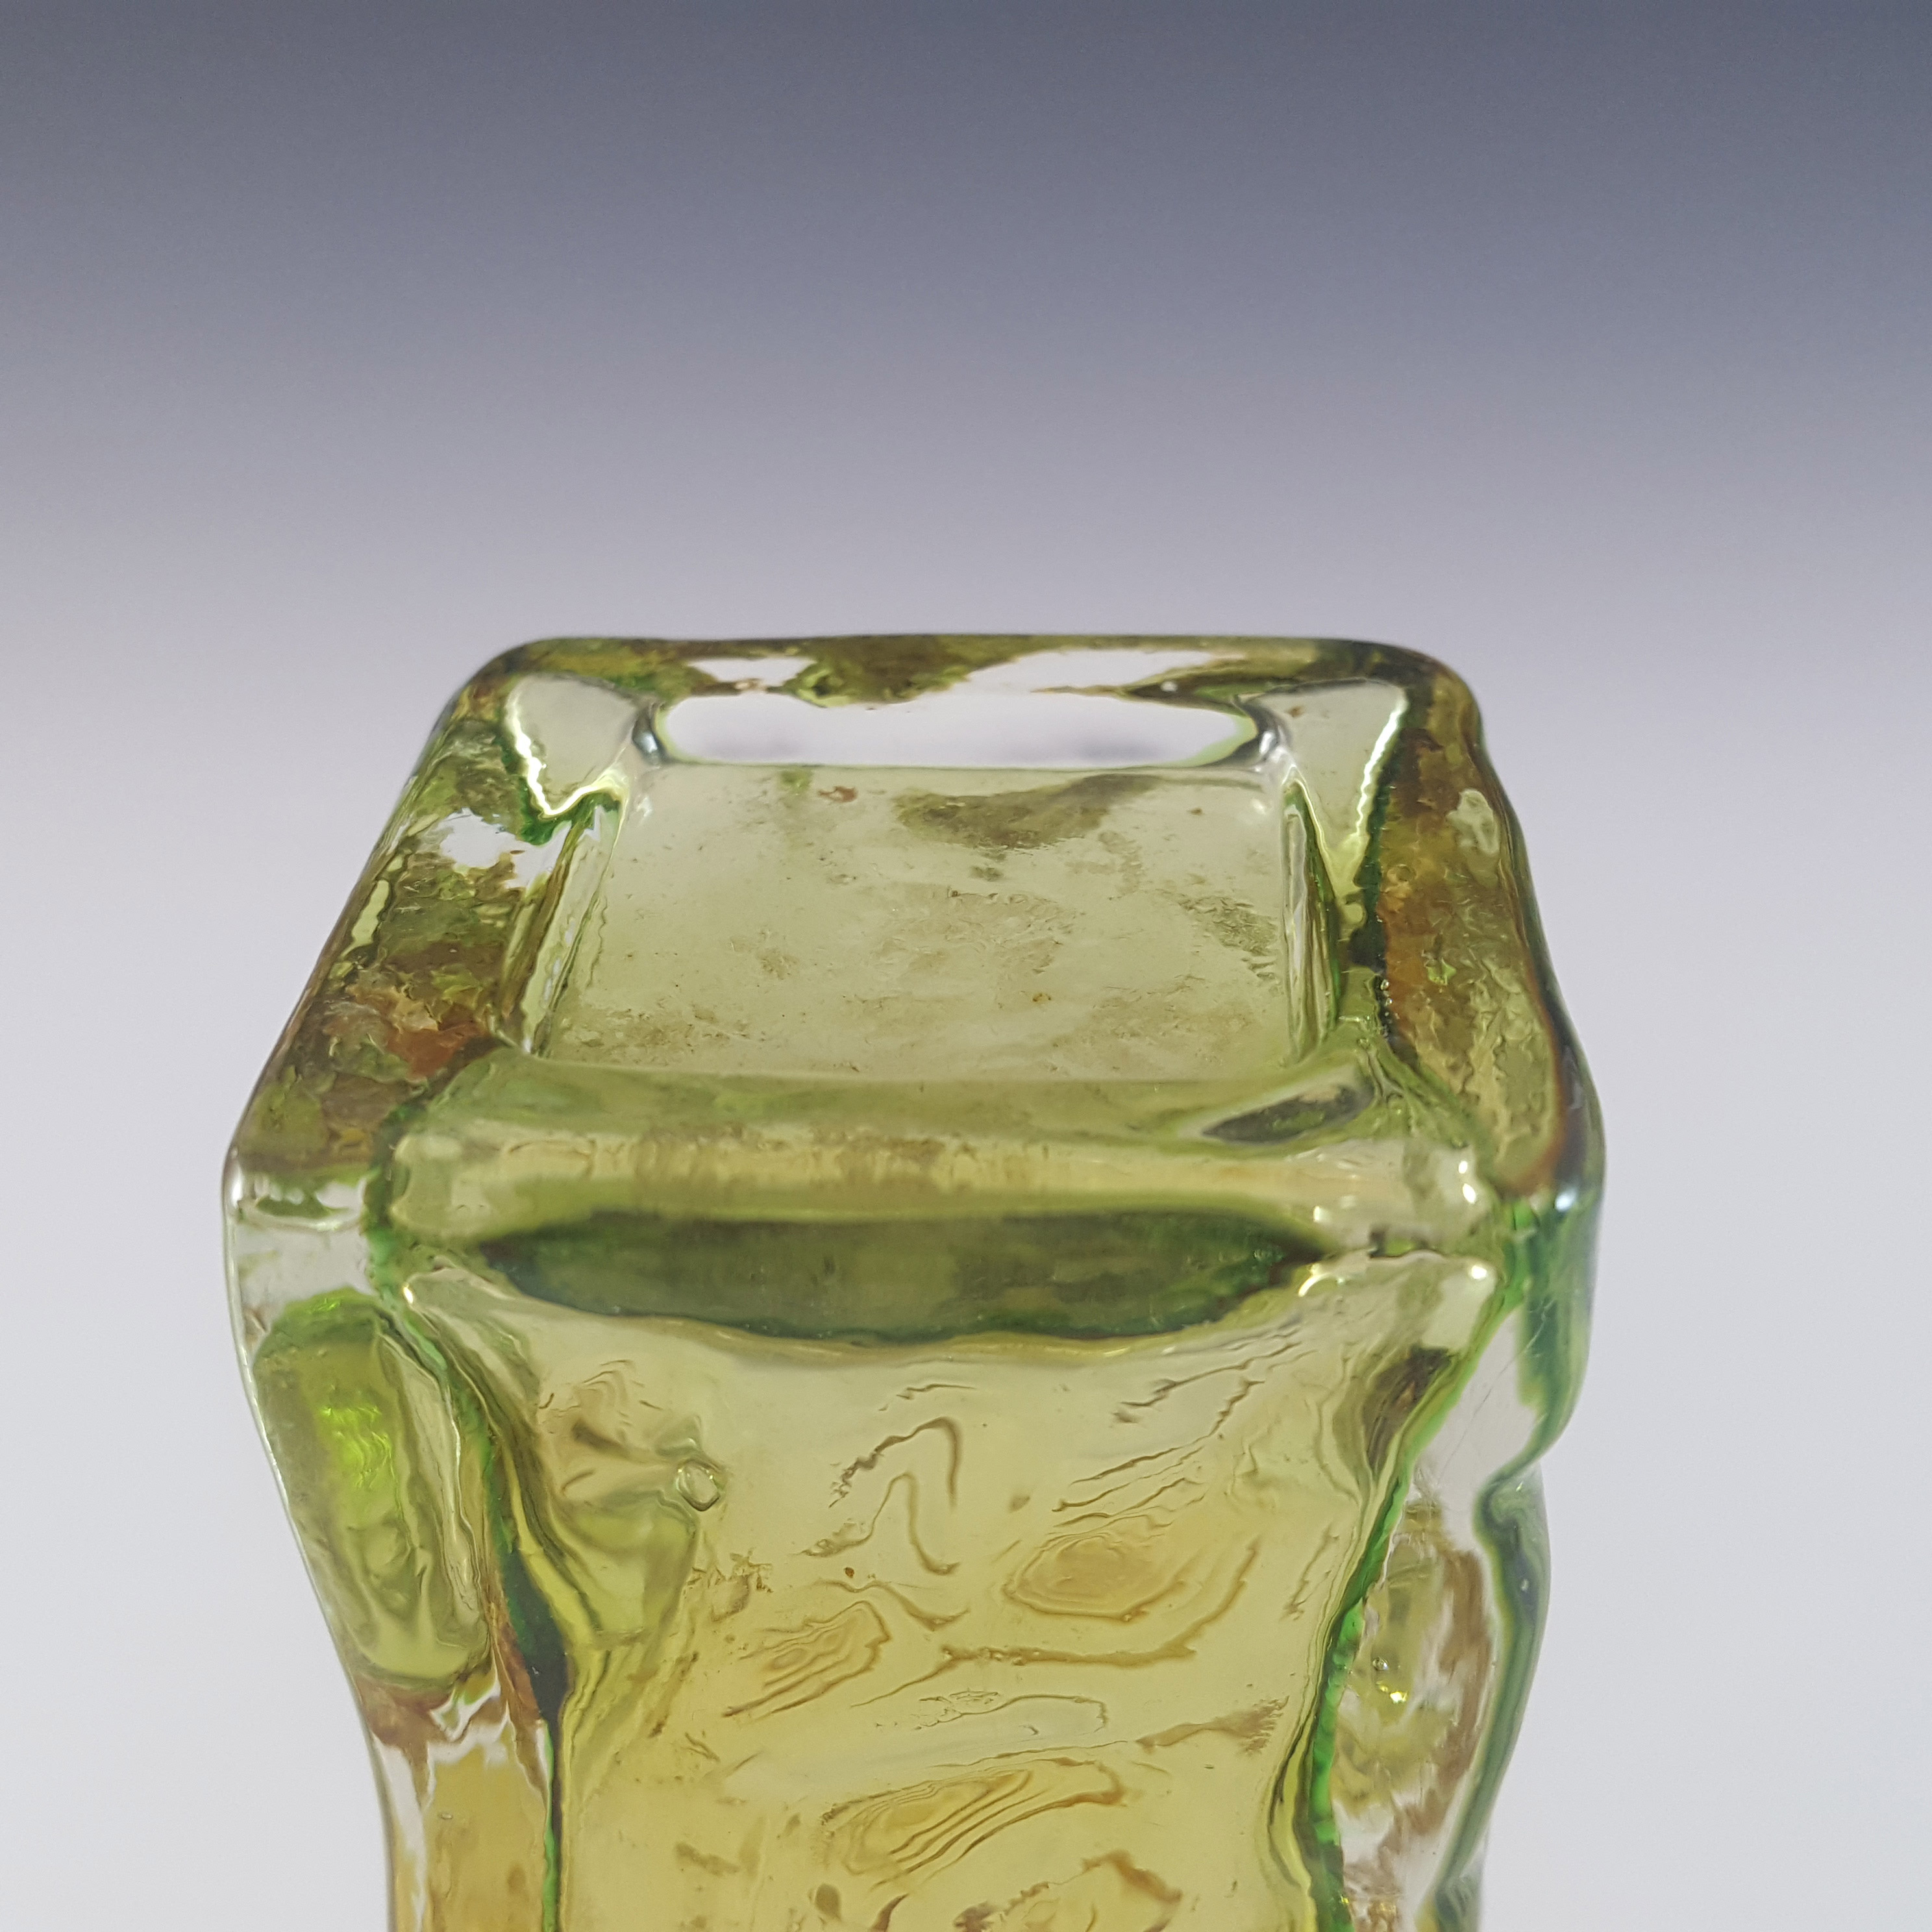 Tajima Japanese "Best Art Glass" Textured Amber & Green Glass Vase - Click Image to Close